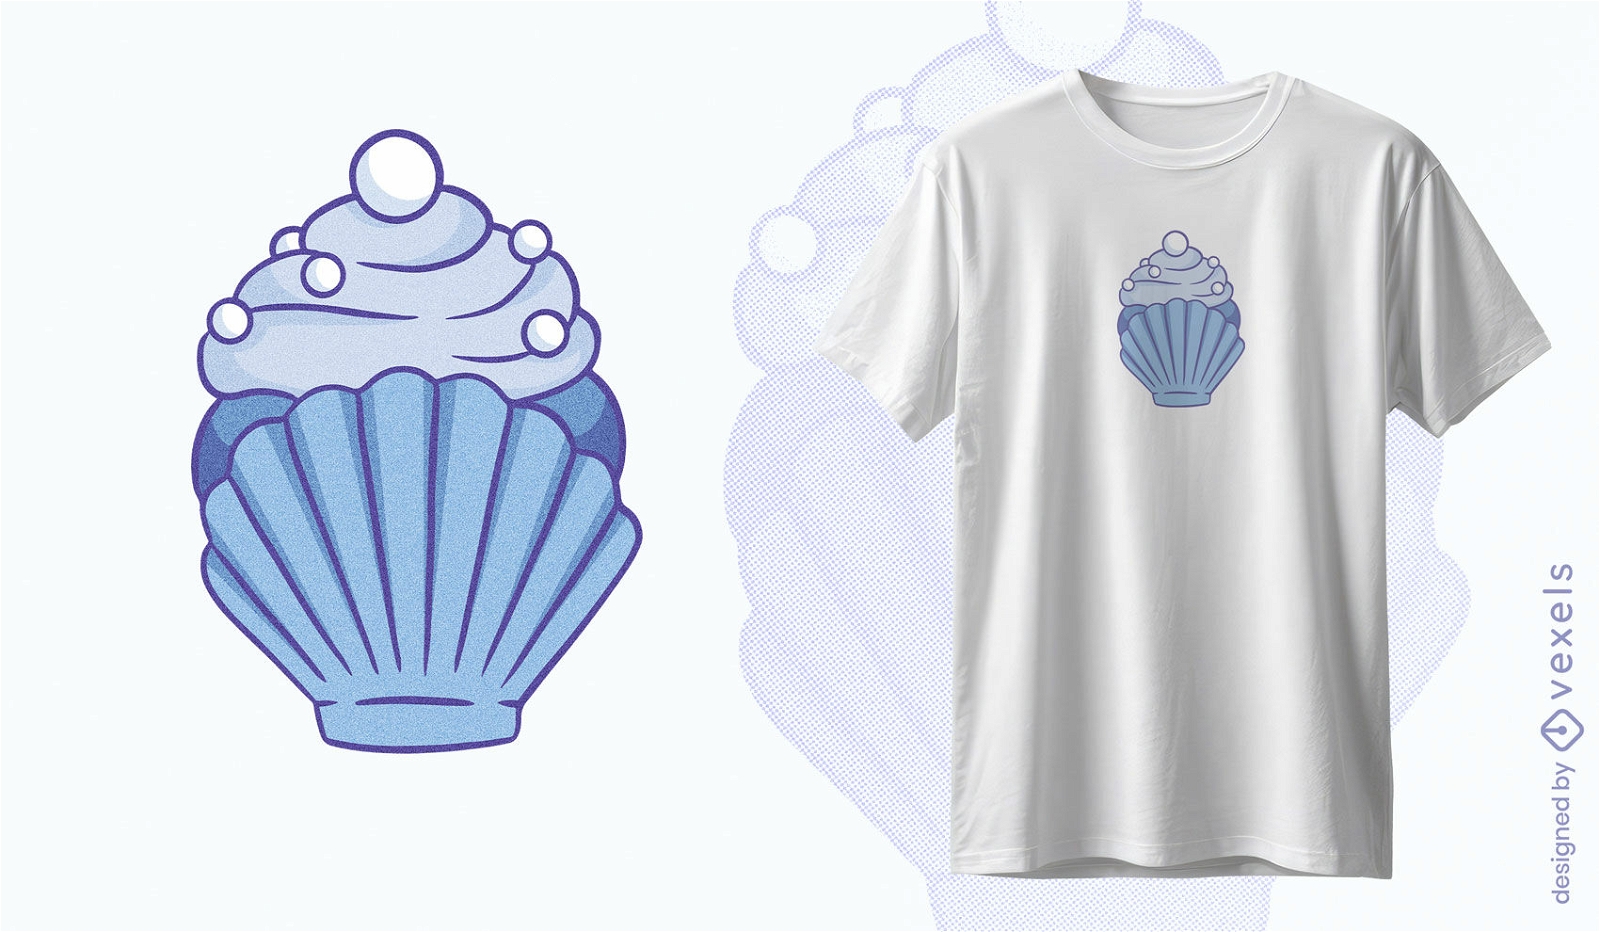 Clam cupcake t-shirt design